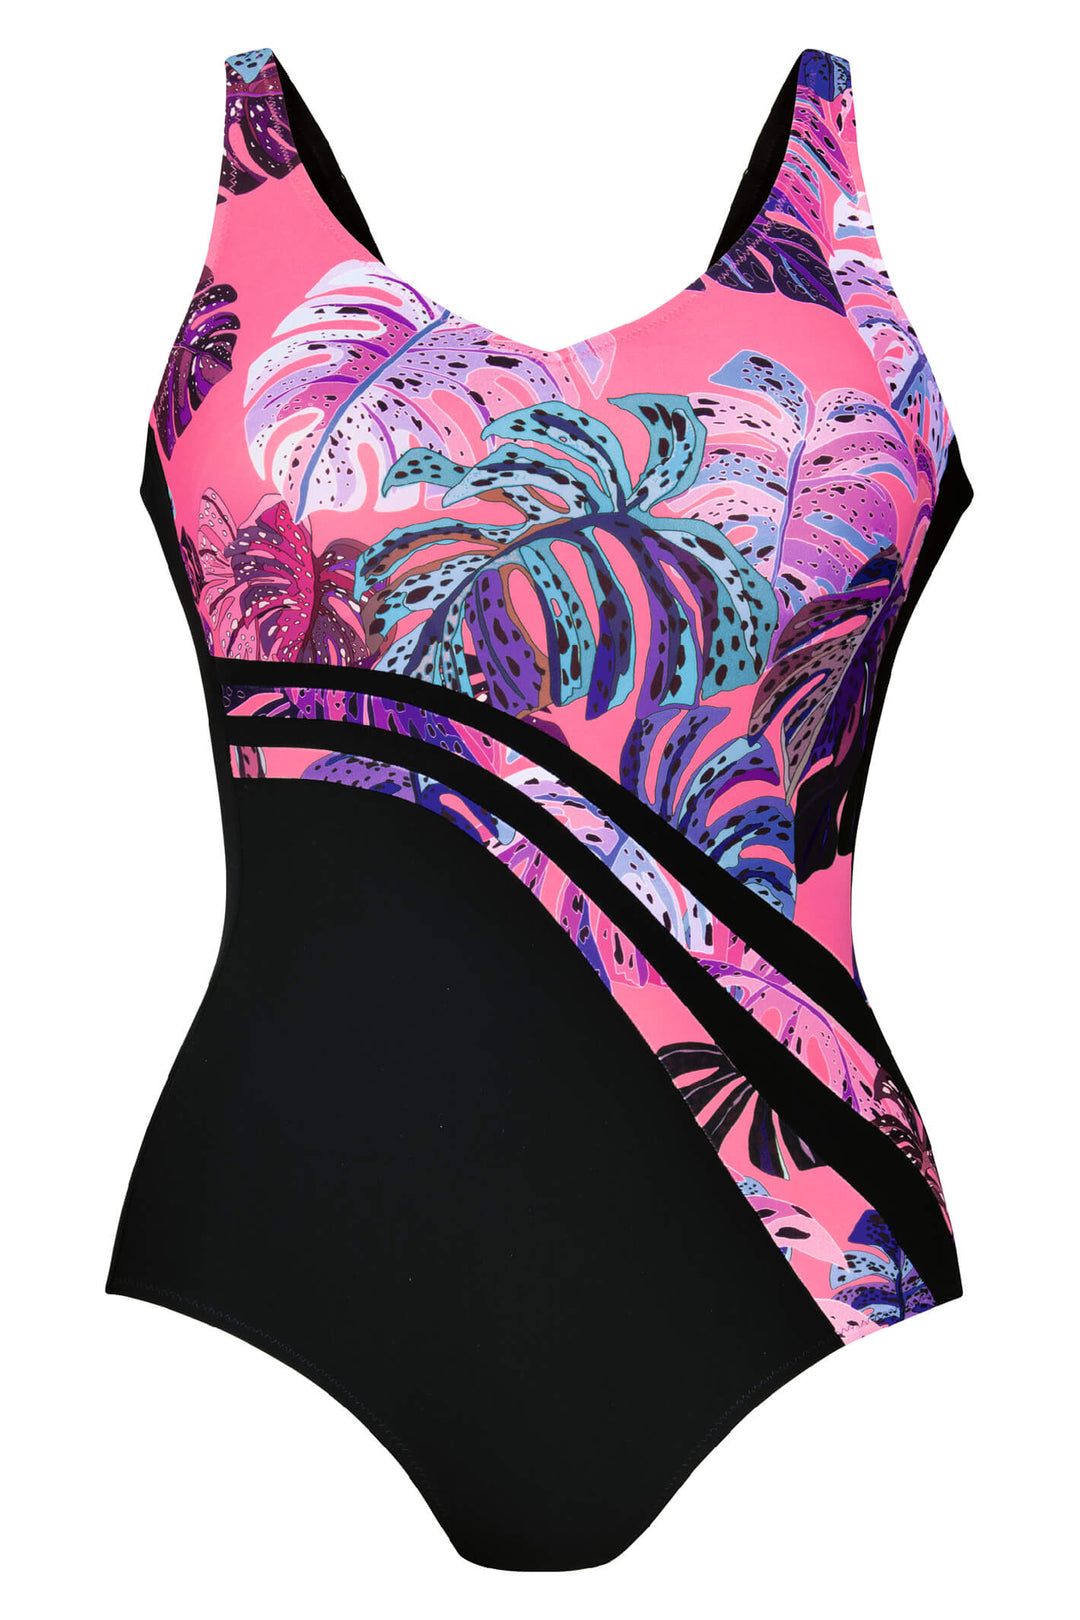 Anita Care M2-6324 Dirban Black Patterned Swimsuit - Shilrey Allum Boutique